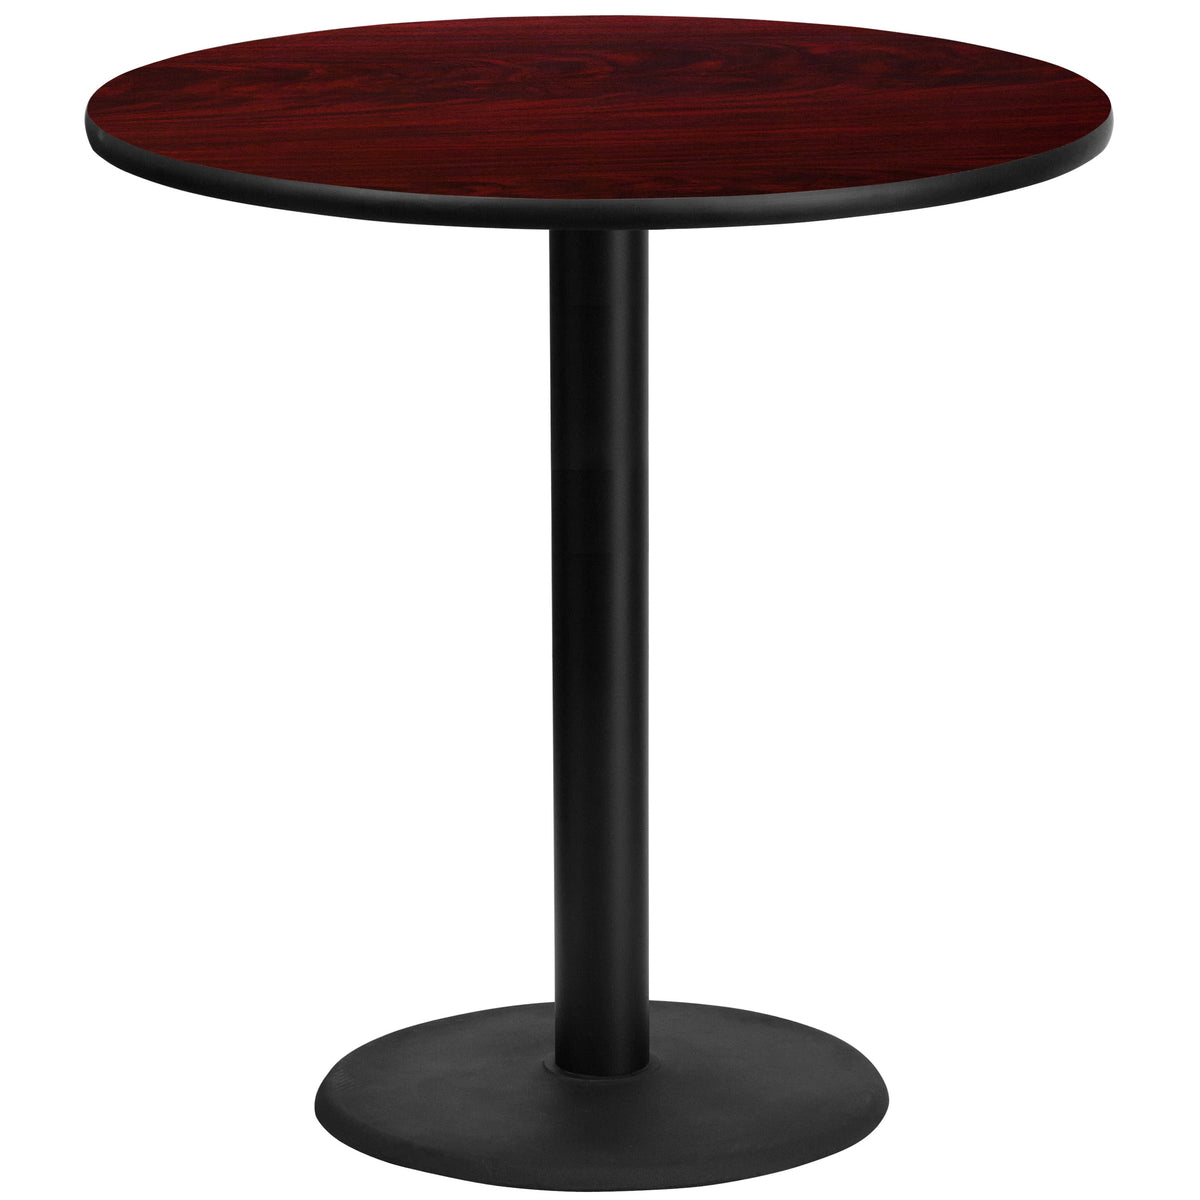 Mahogany |#| 42inch Round Mahogany Laminate Table Top with 24inch Round Bar Height Table Base